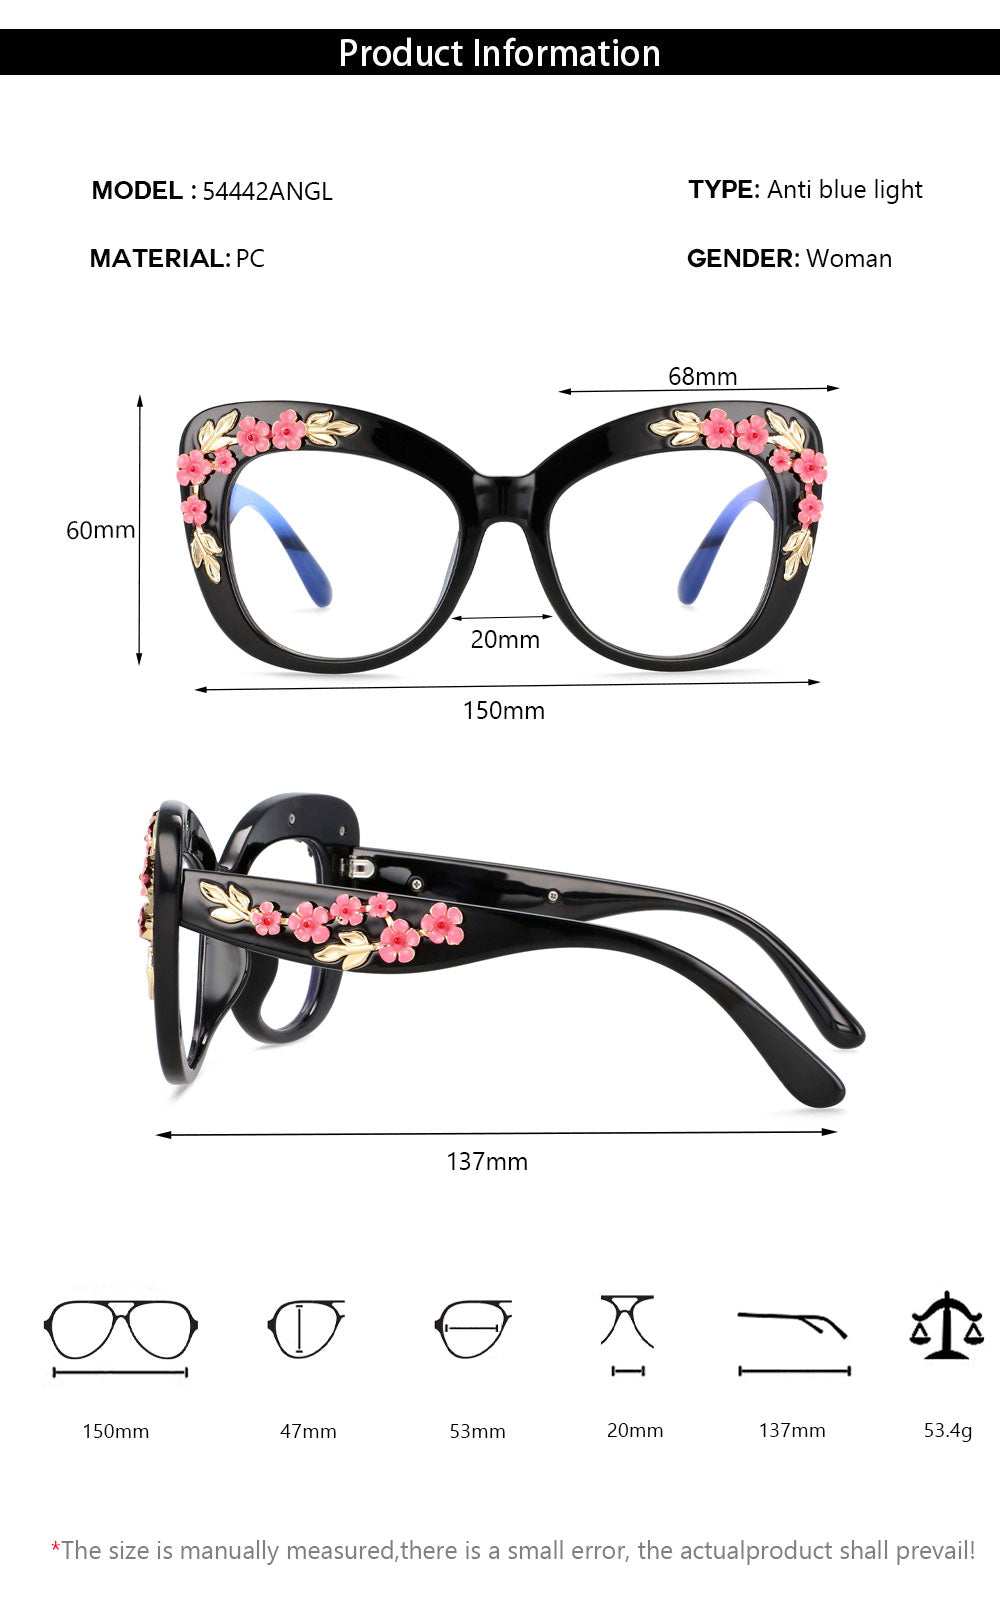 CCSpace Women's Full Rim Oversized Square Cat Eye Resin Frame Eyeglasses 54442 Full Rim CCspace   